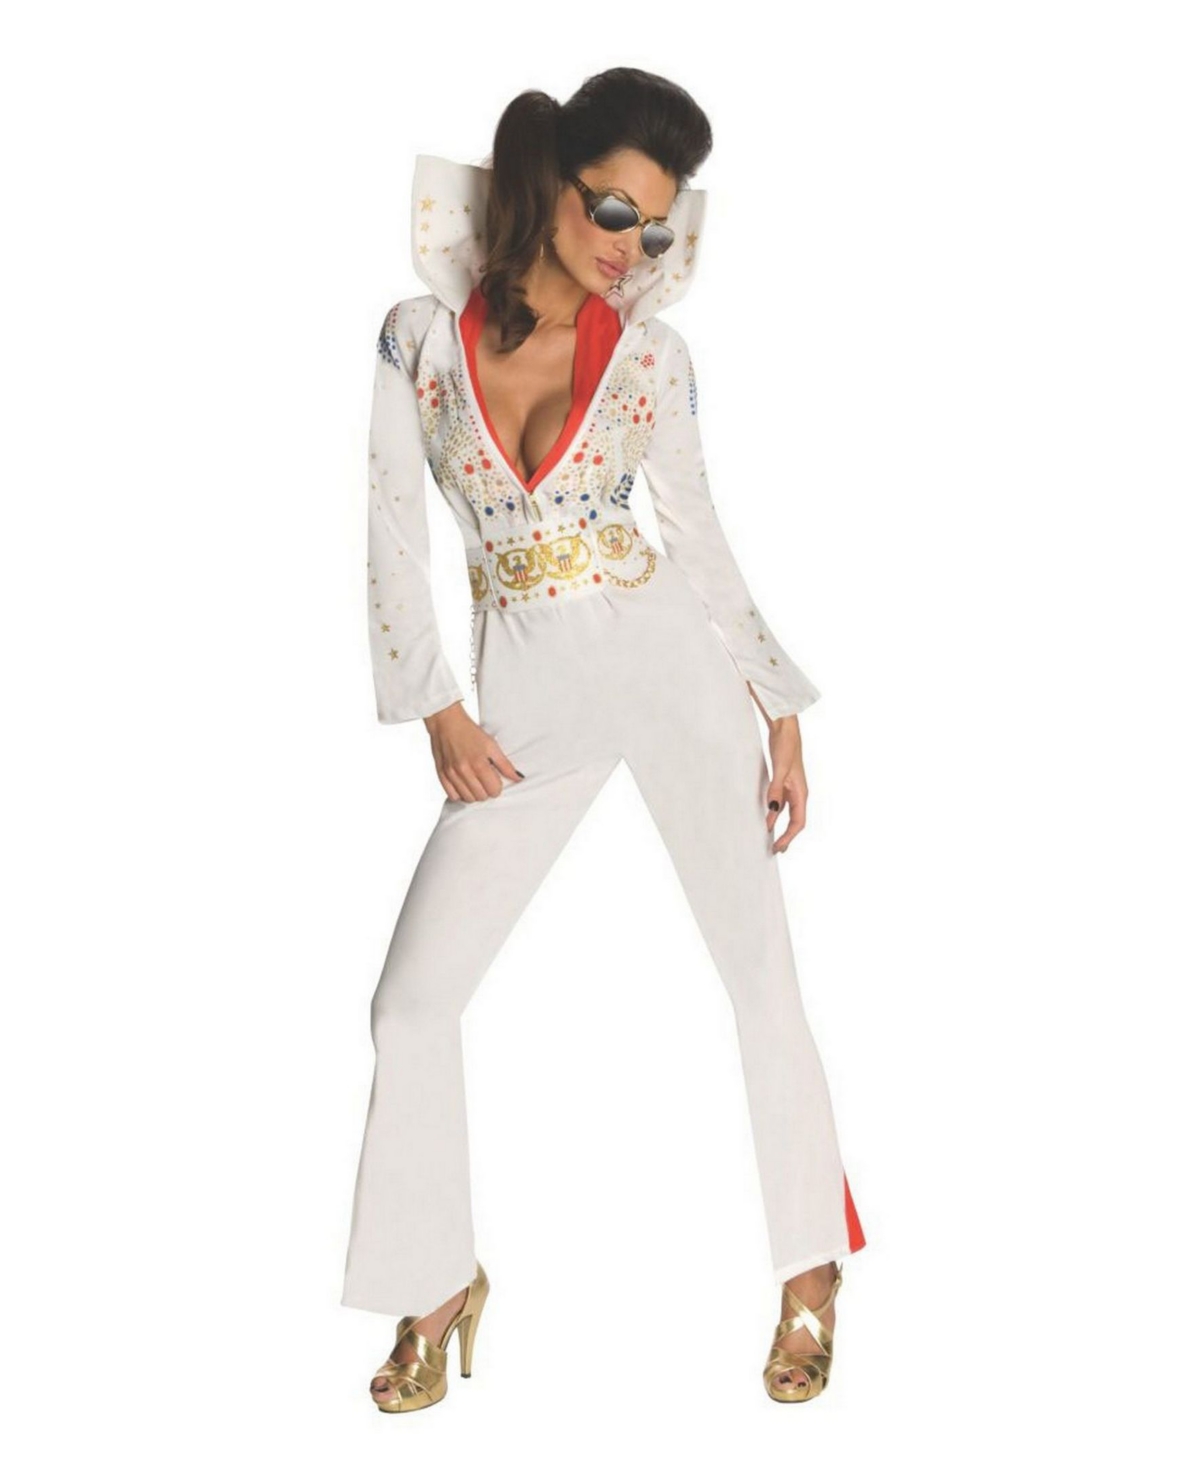 Women's Sassy Elvis Adult Costume - White